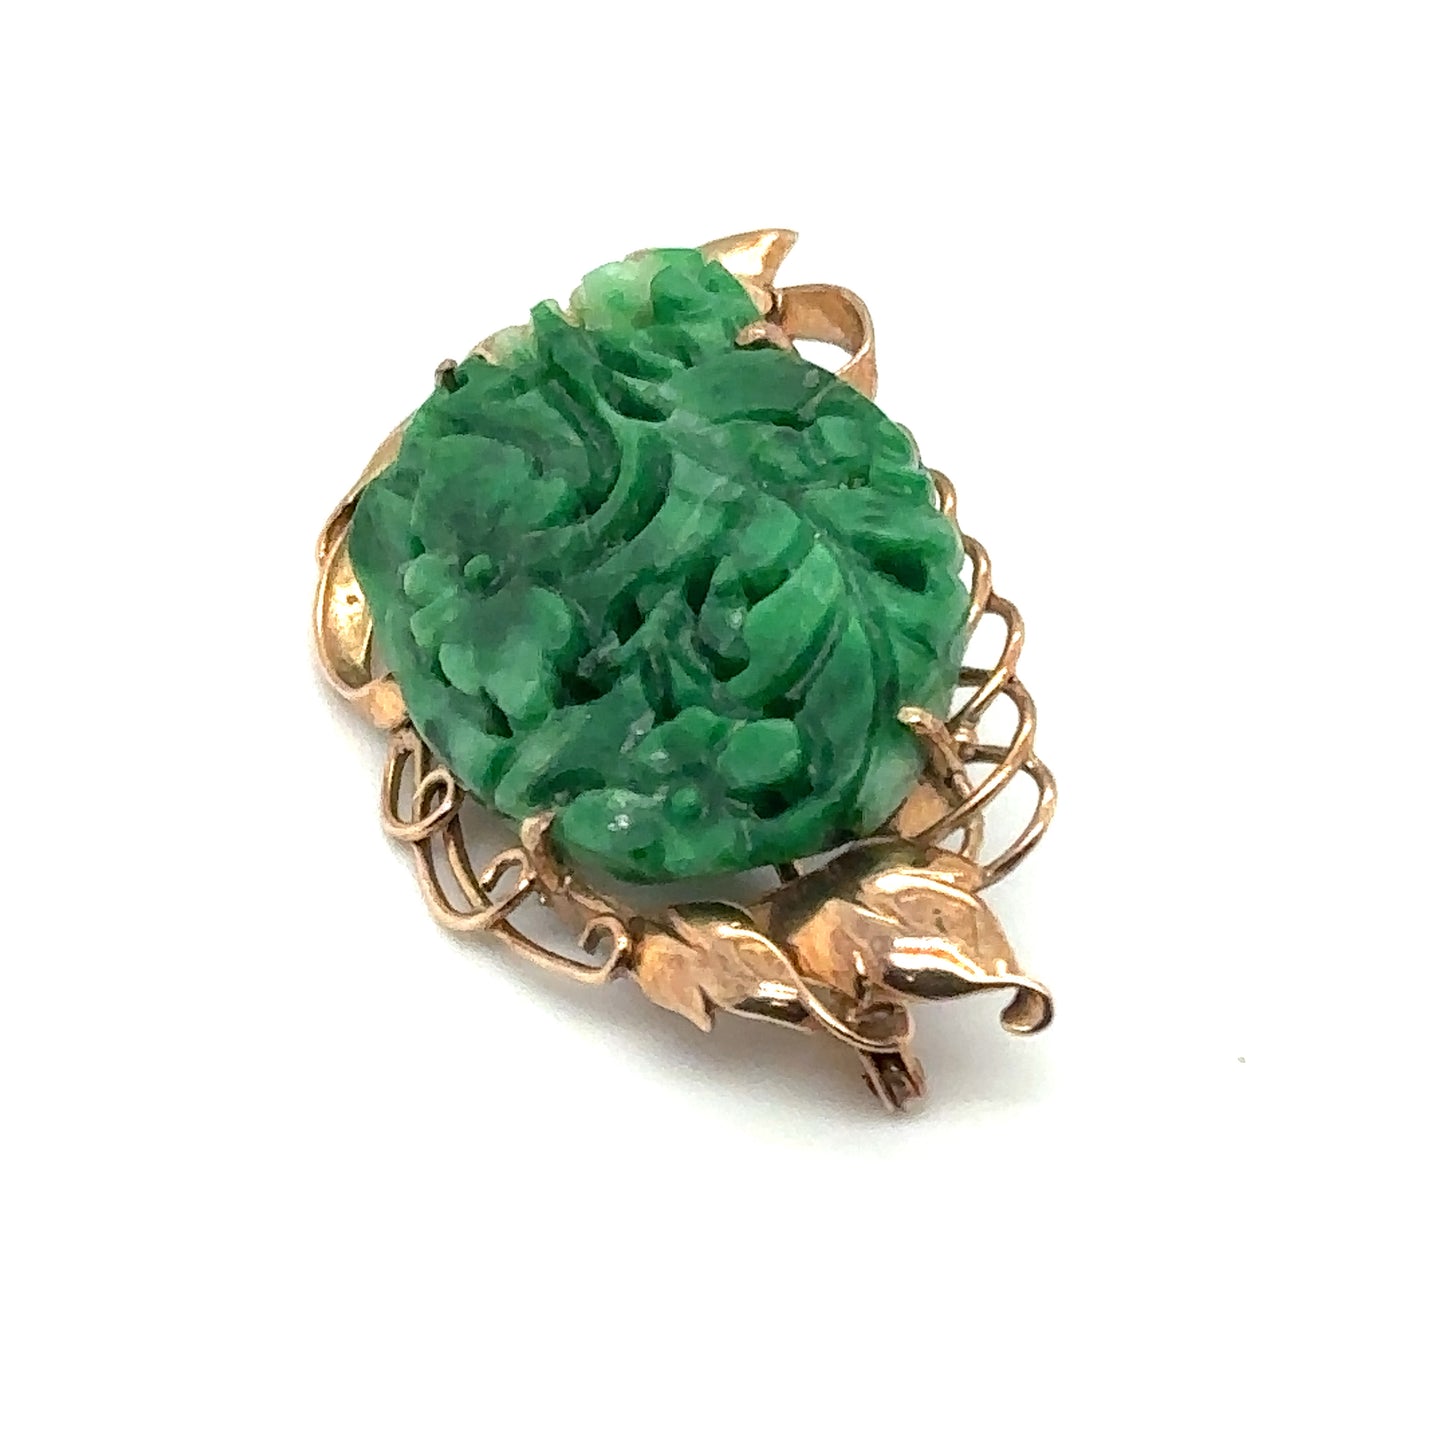 Victorian Carved Green Jade Brooch with Leaf Design in 14K Gold